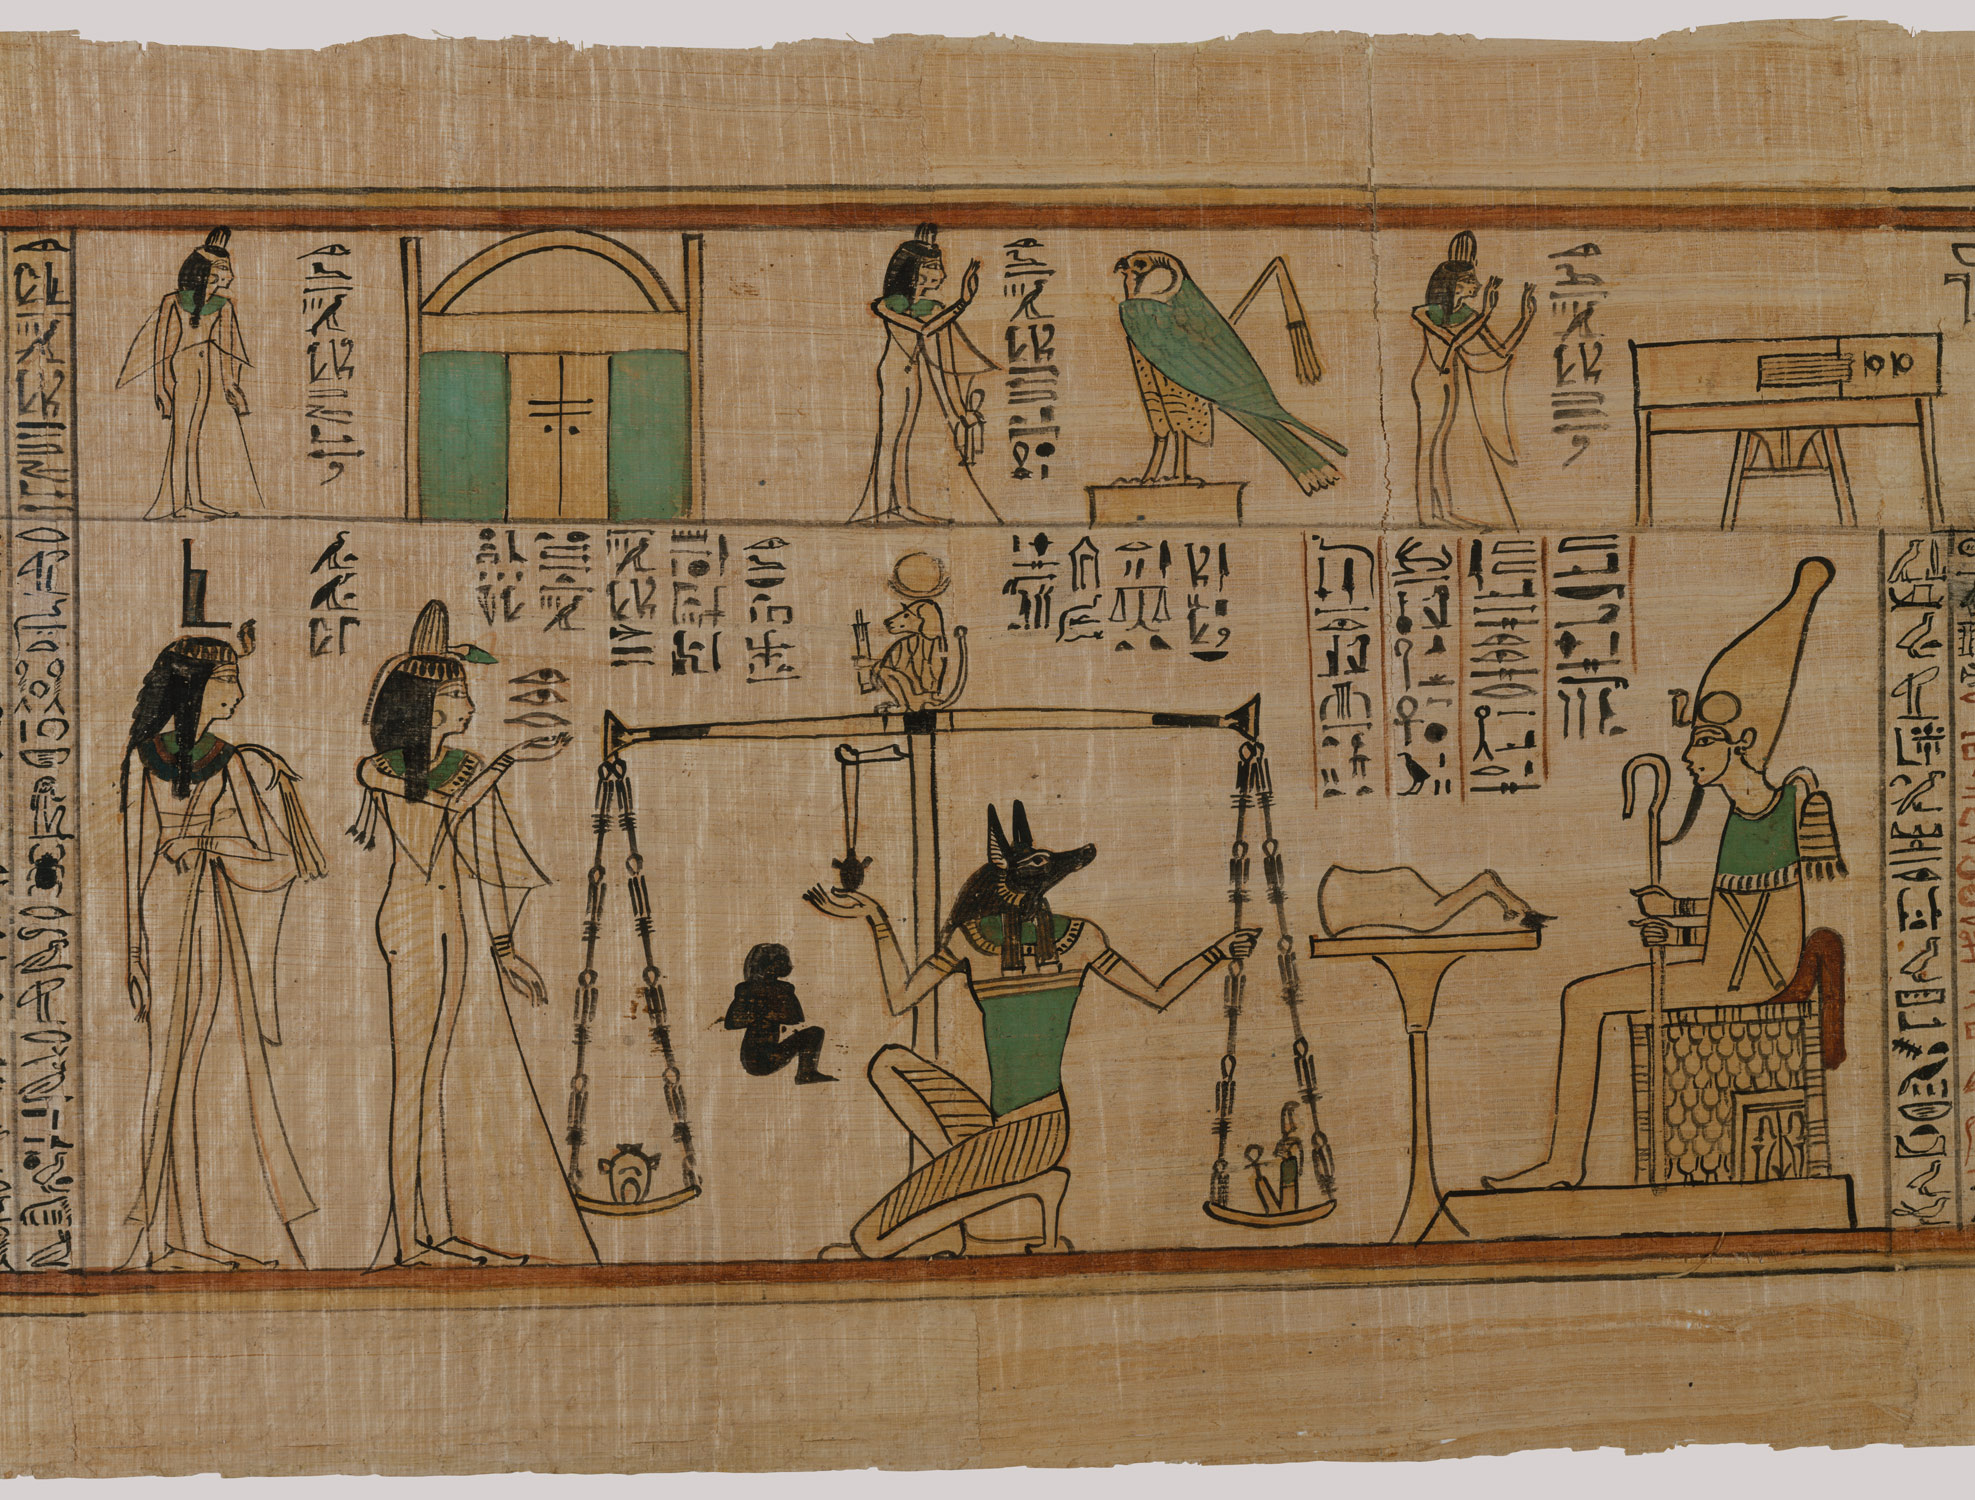 The Singer of Amun Nanys Funerary Papyrus